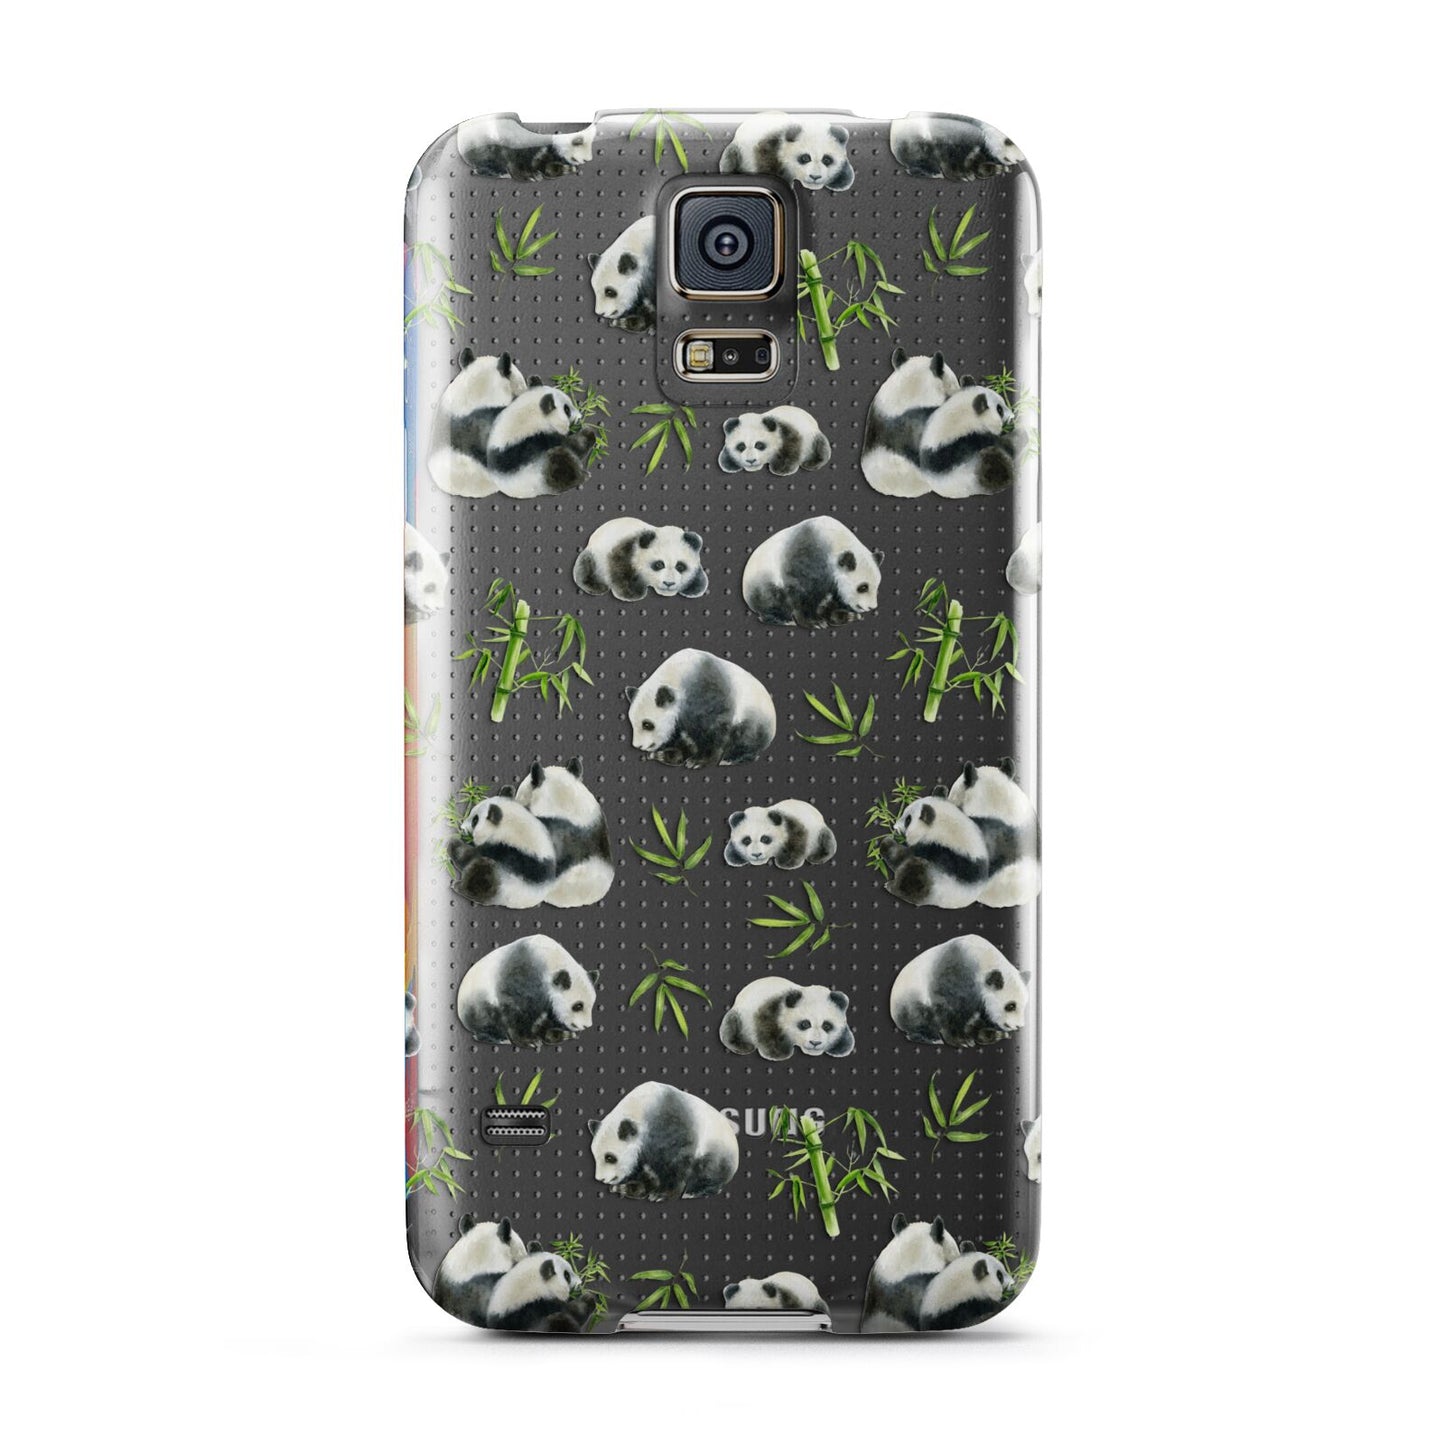 Panda Samsung Galaxy S5 Case